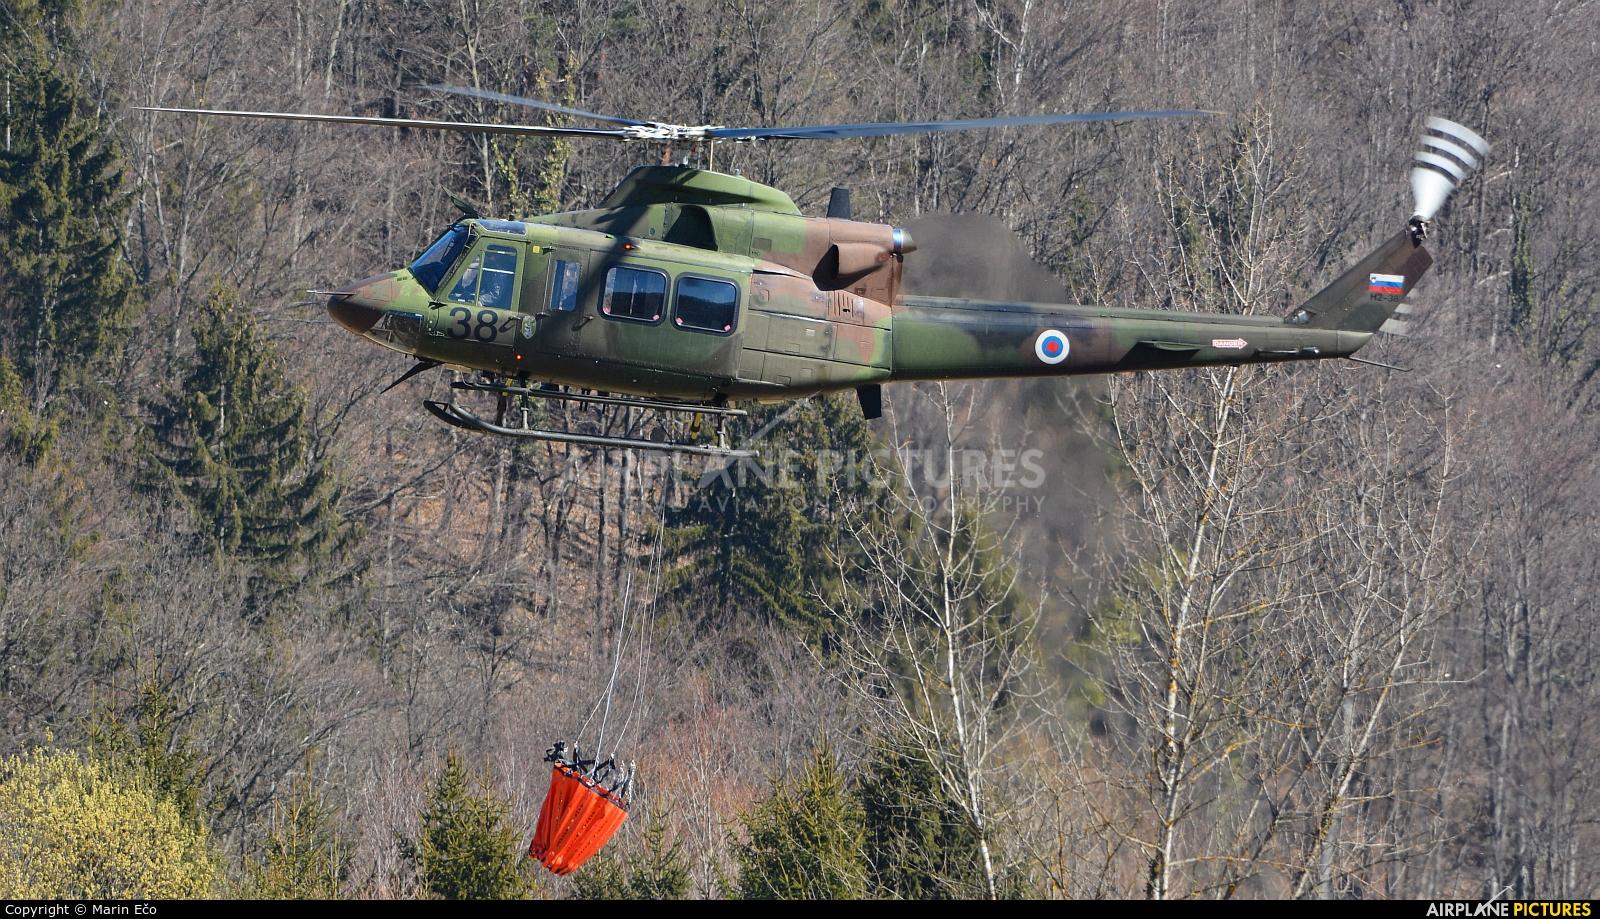 Slovenia - Air Force H2-38 aircraft at Off Airport - Slovenia